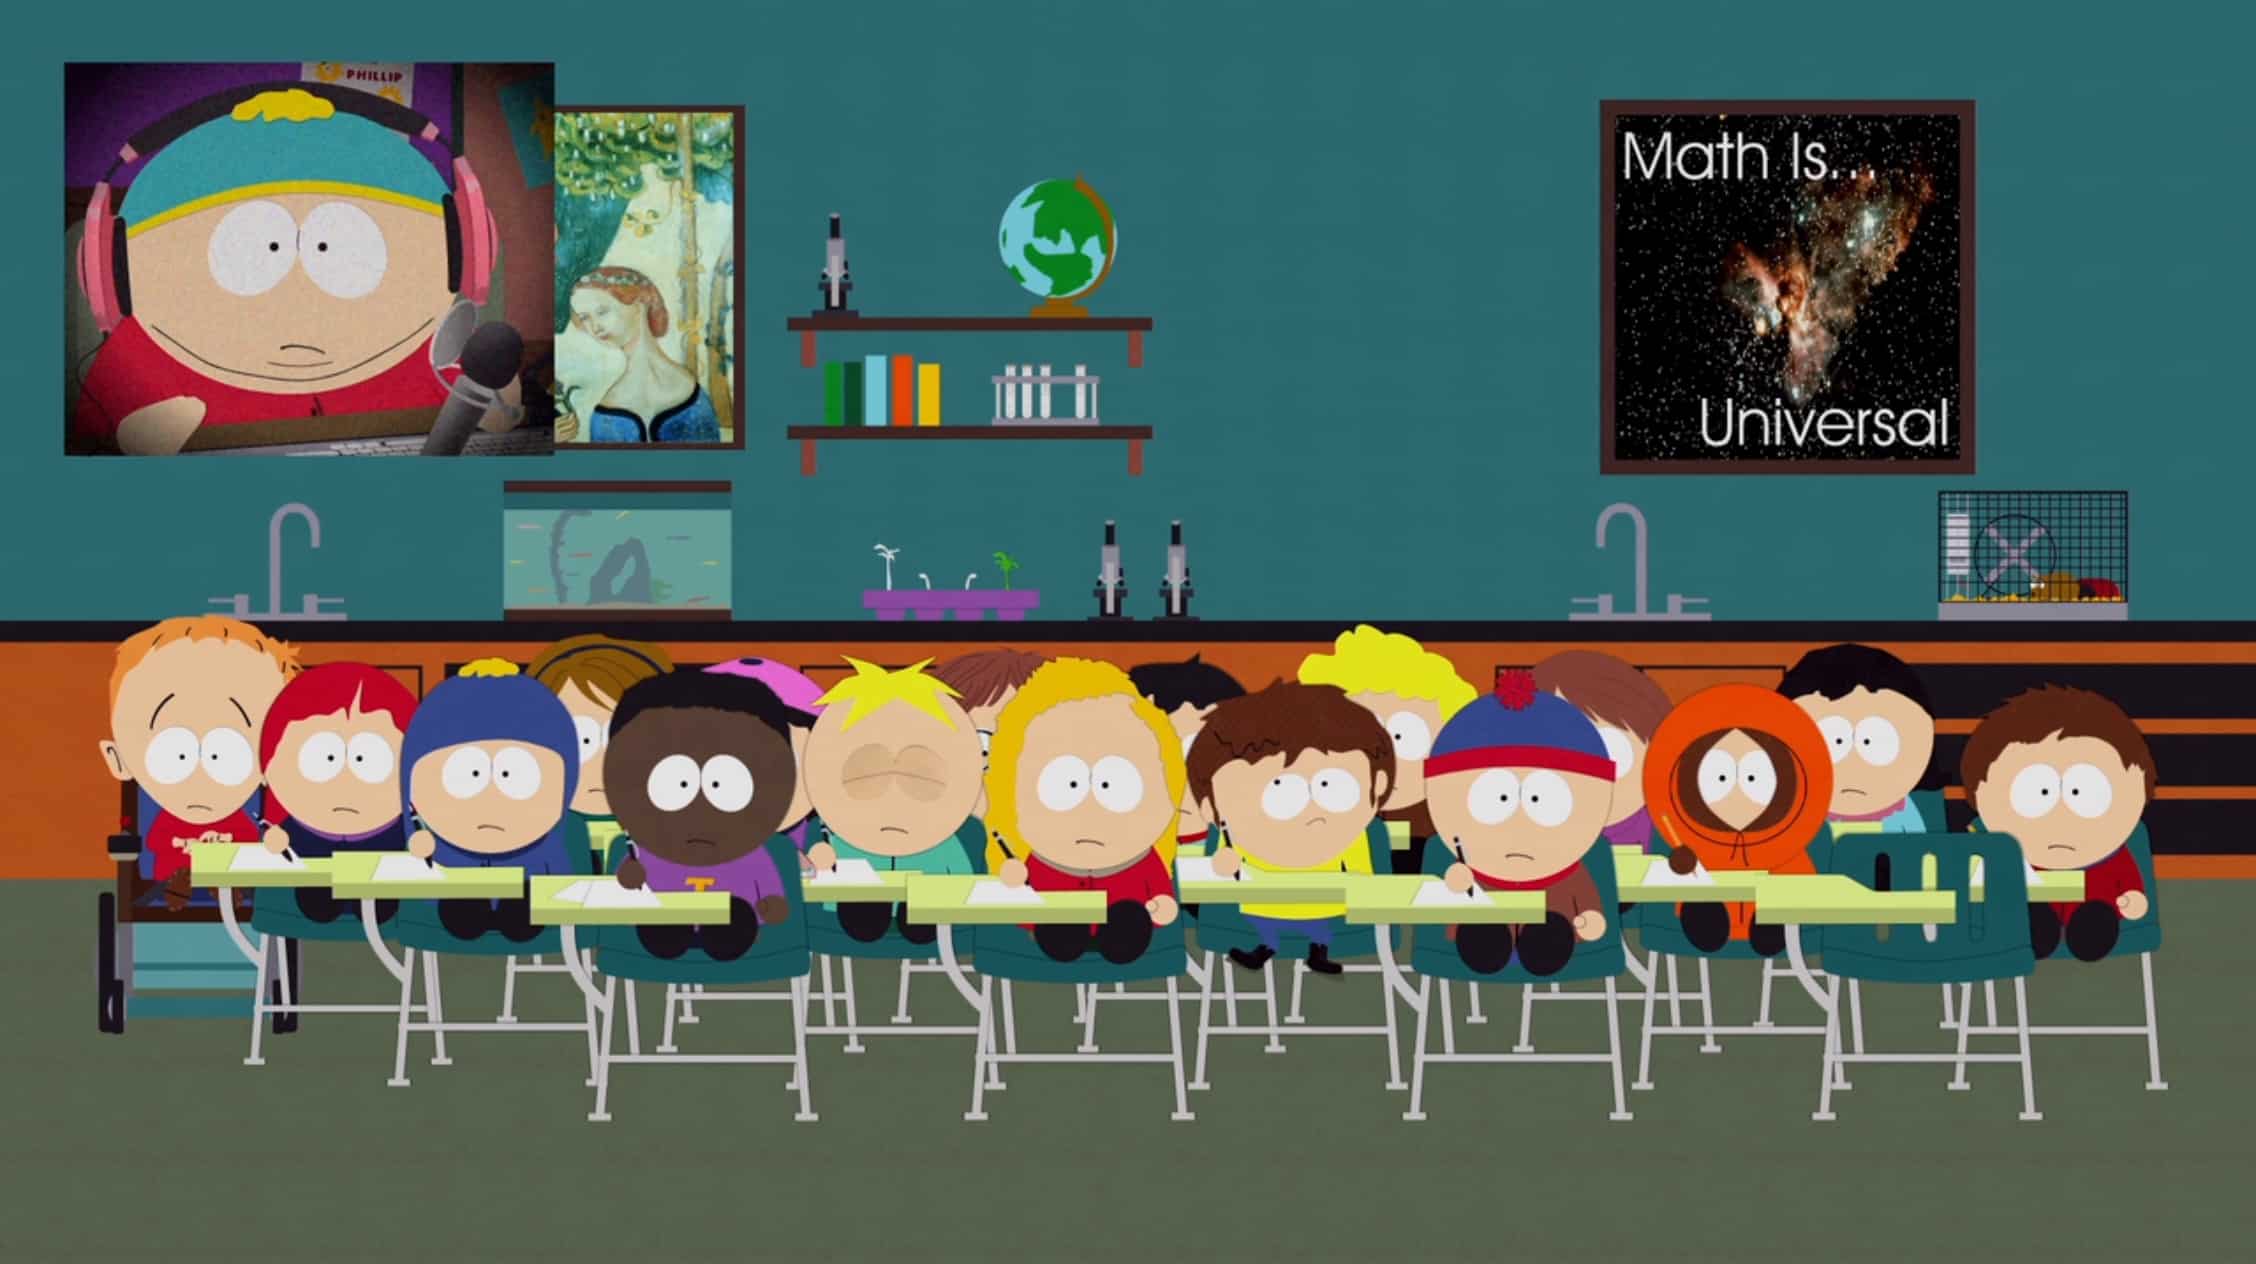 Cartman's stream disrupts Kyle's speech in Mr. Garrison's class.